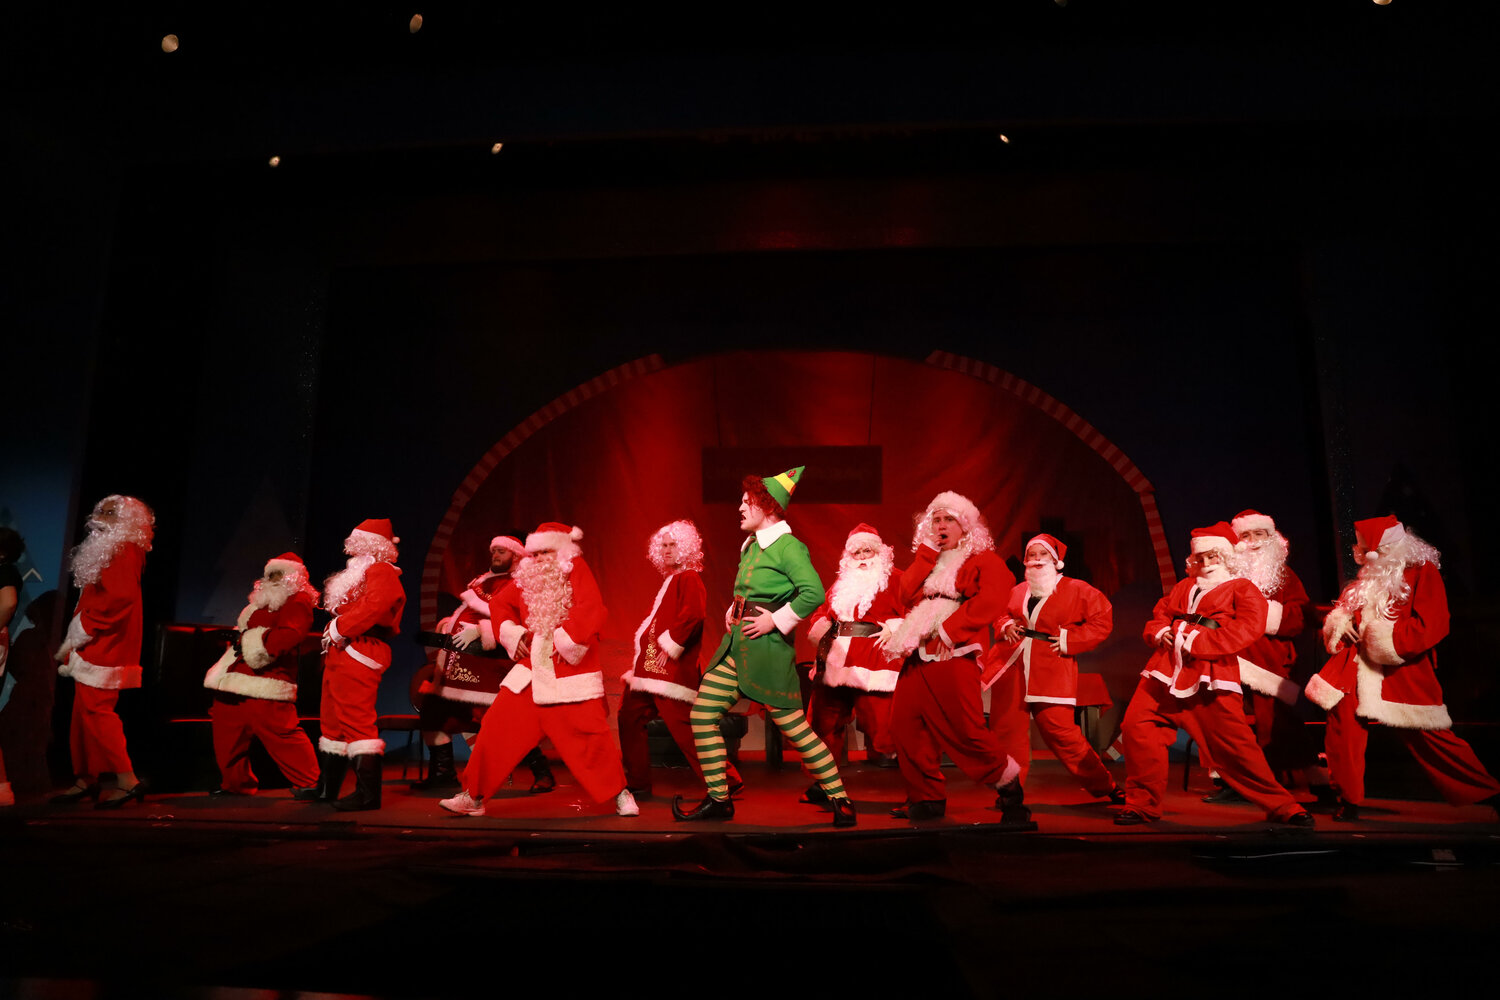 ‘Elf’ meets tall order for Christmas joy